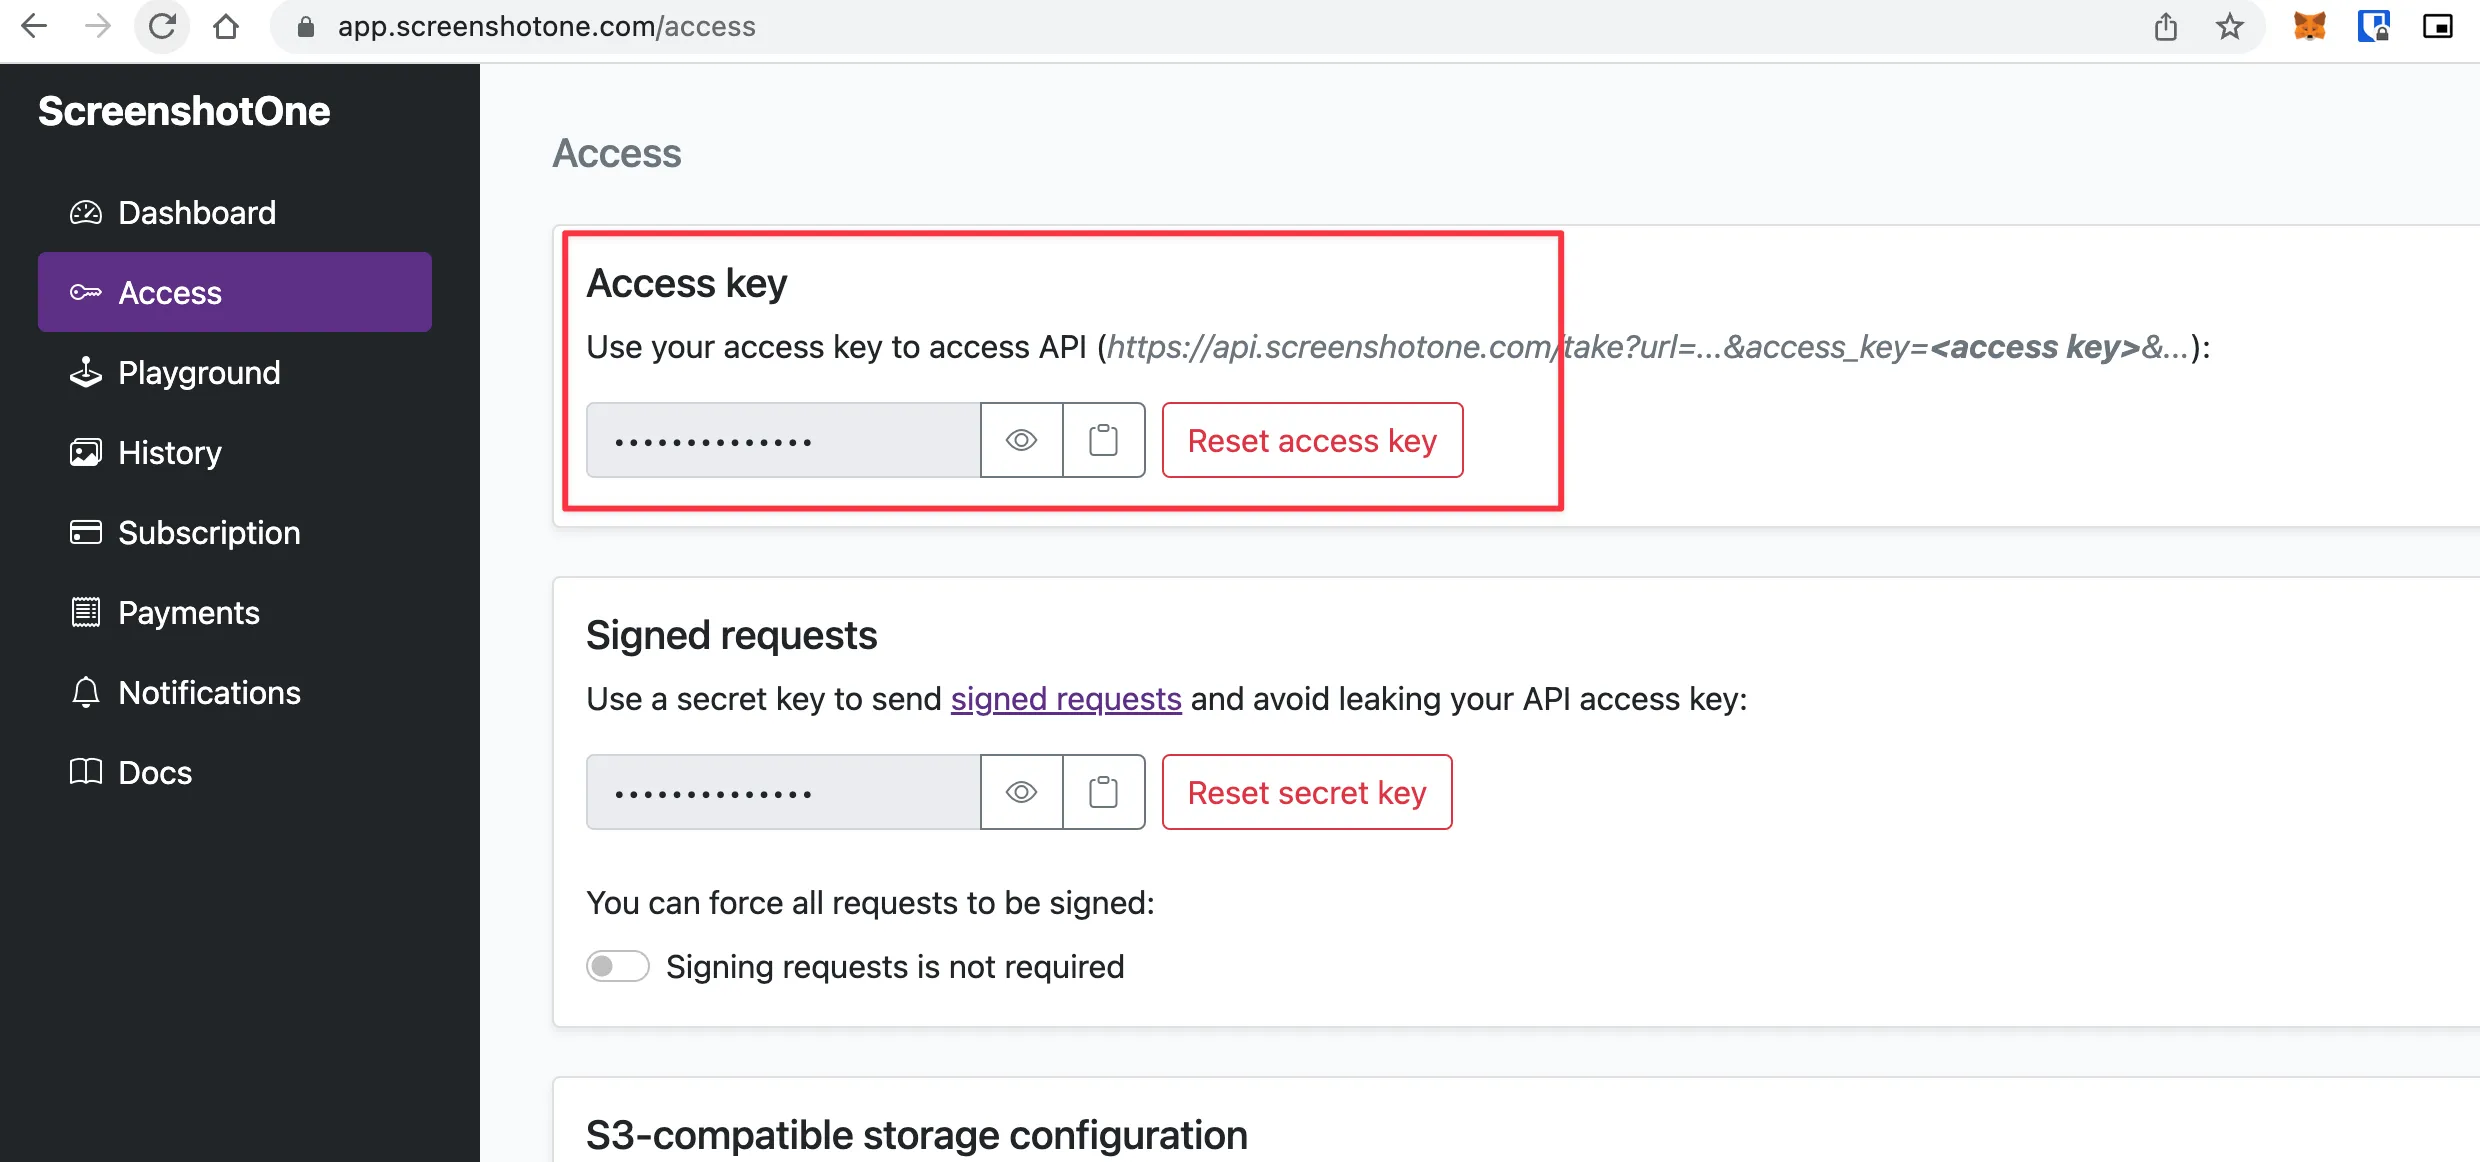 Copy Access Key from ScreenshotOne